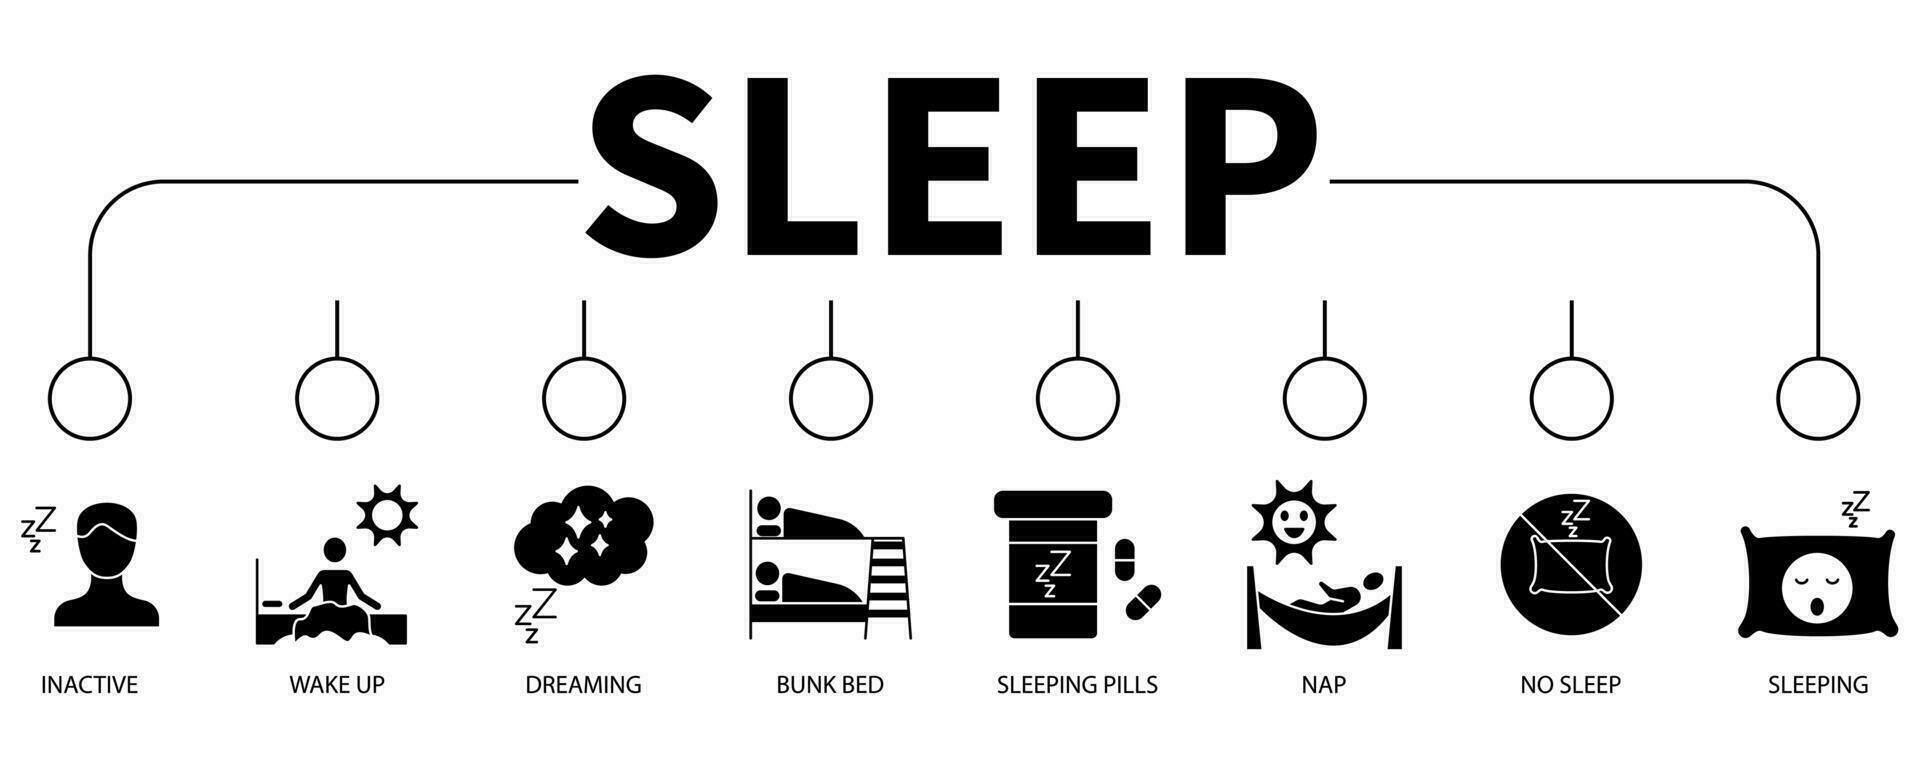 Sleep banner web icon vector illustration concept